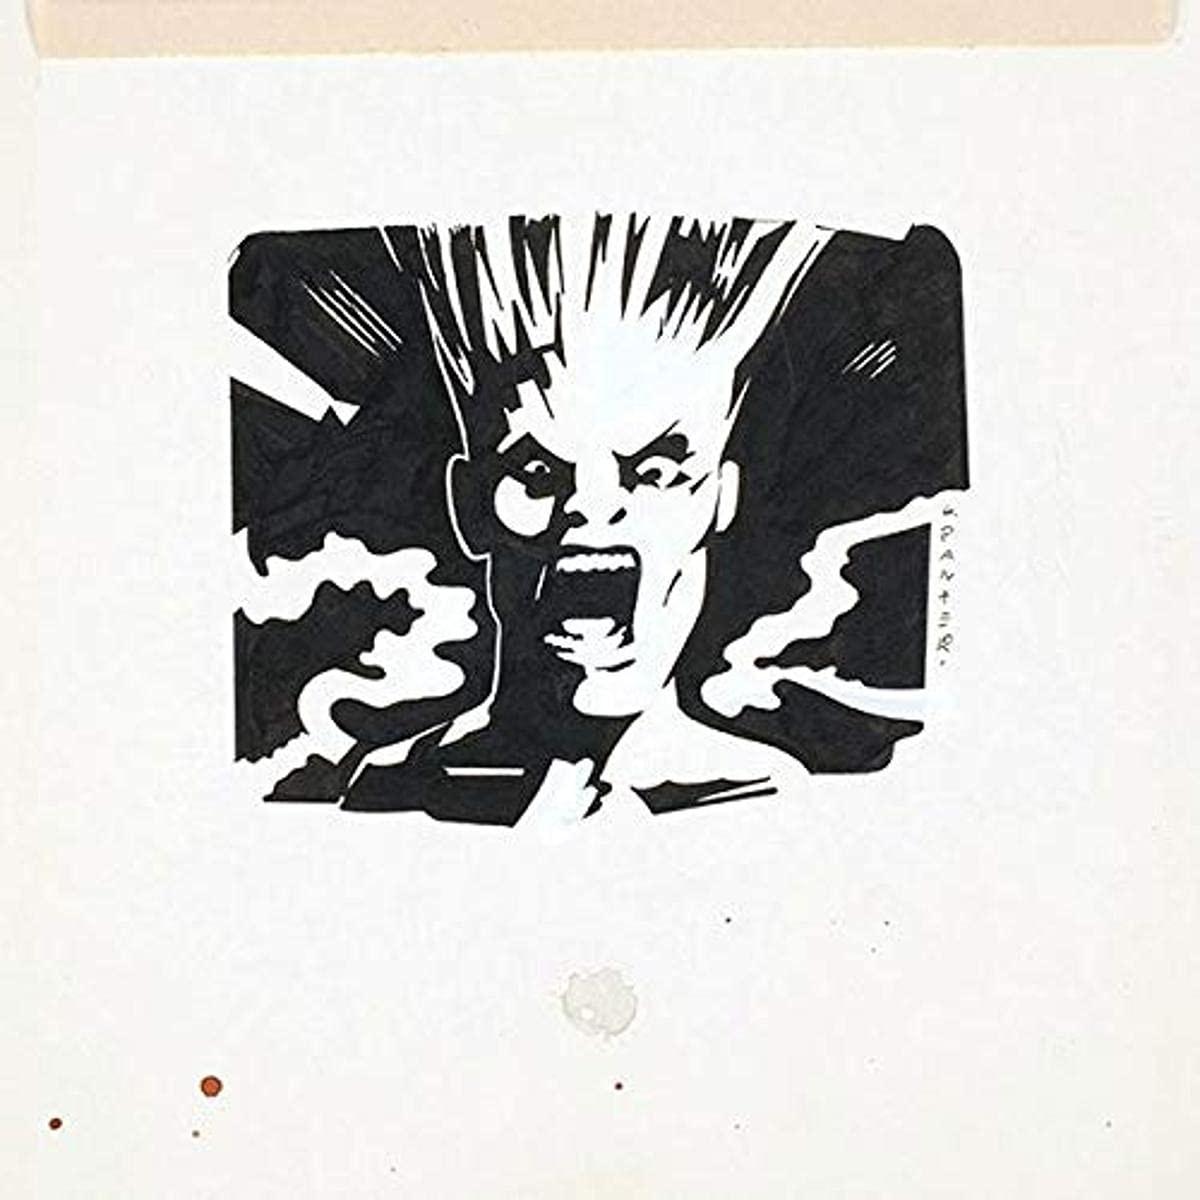 Screamers - Demo Hollywood 1977 vinyl cover